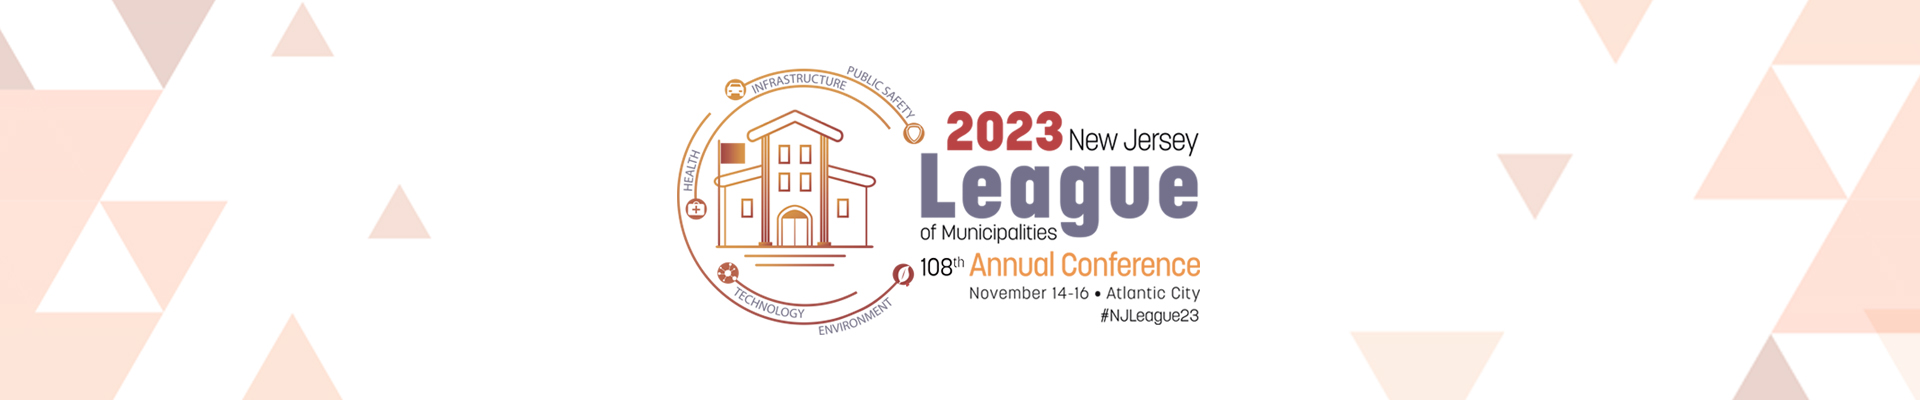 NJ league logo